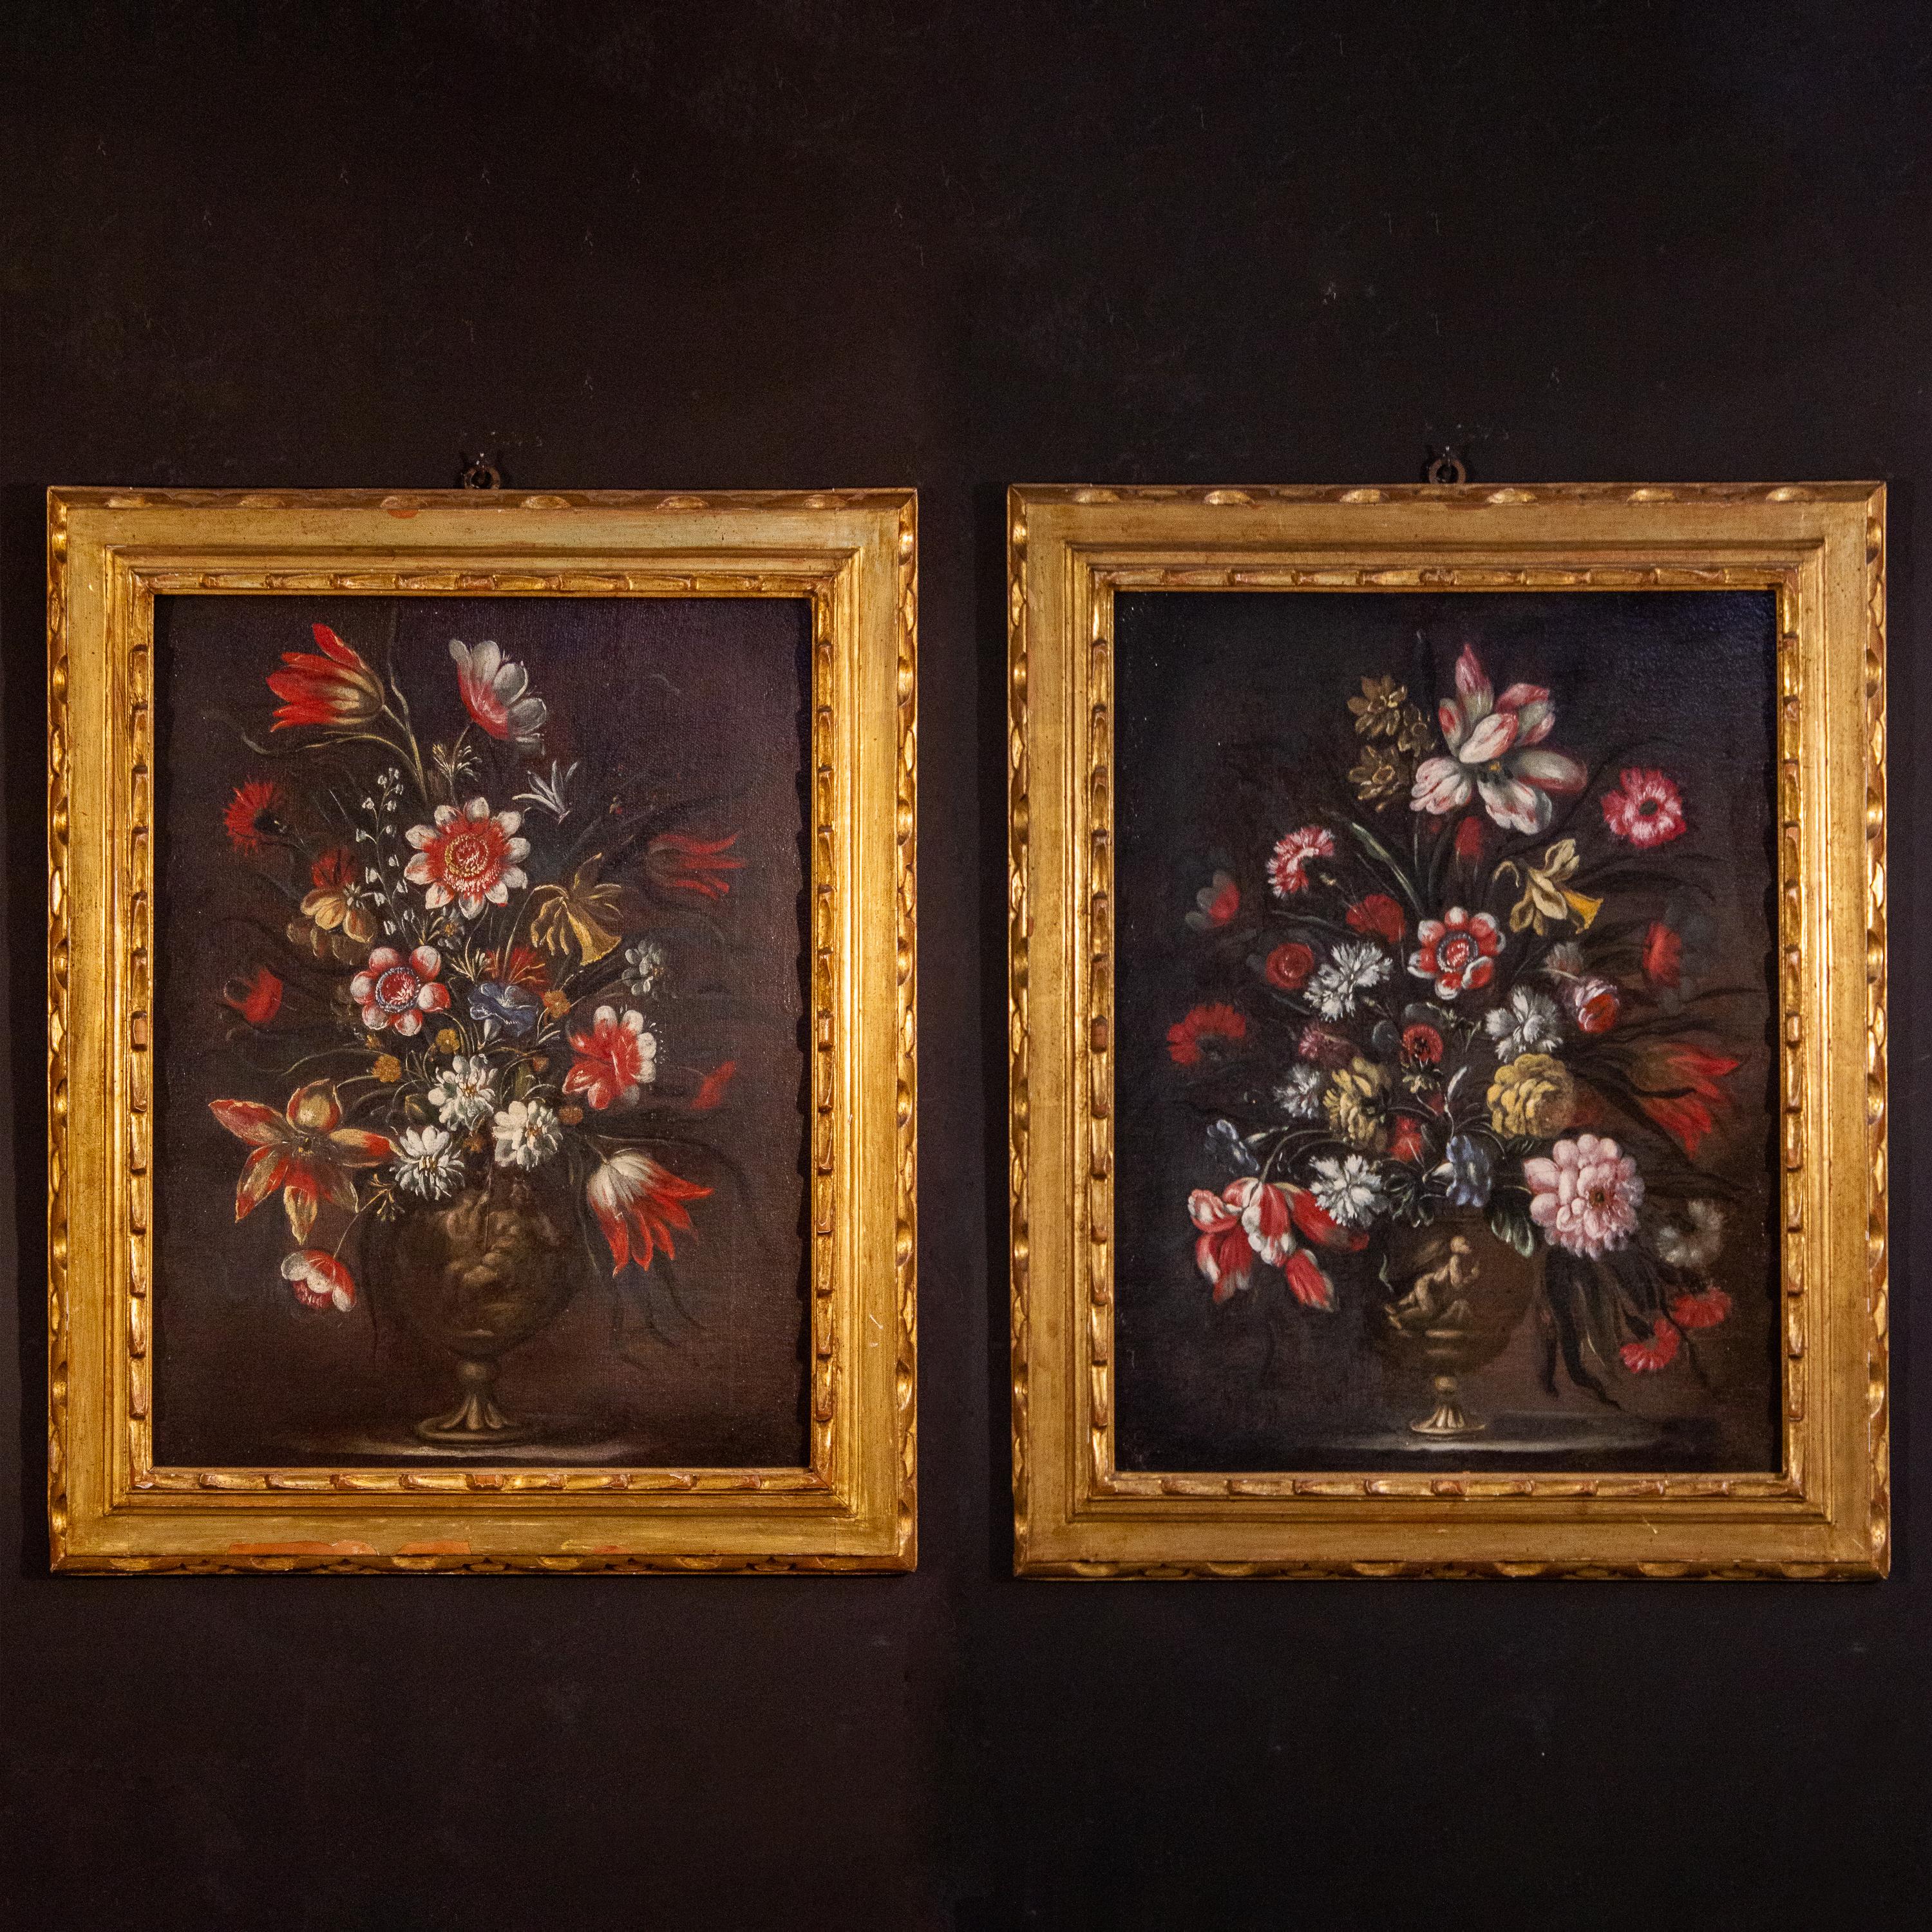 Pair of 18th century Italian Still Life Paintings of Flowers  